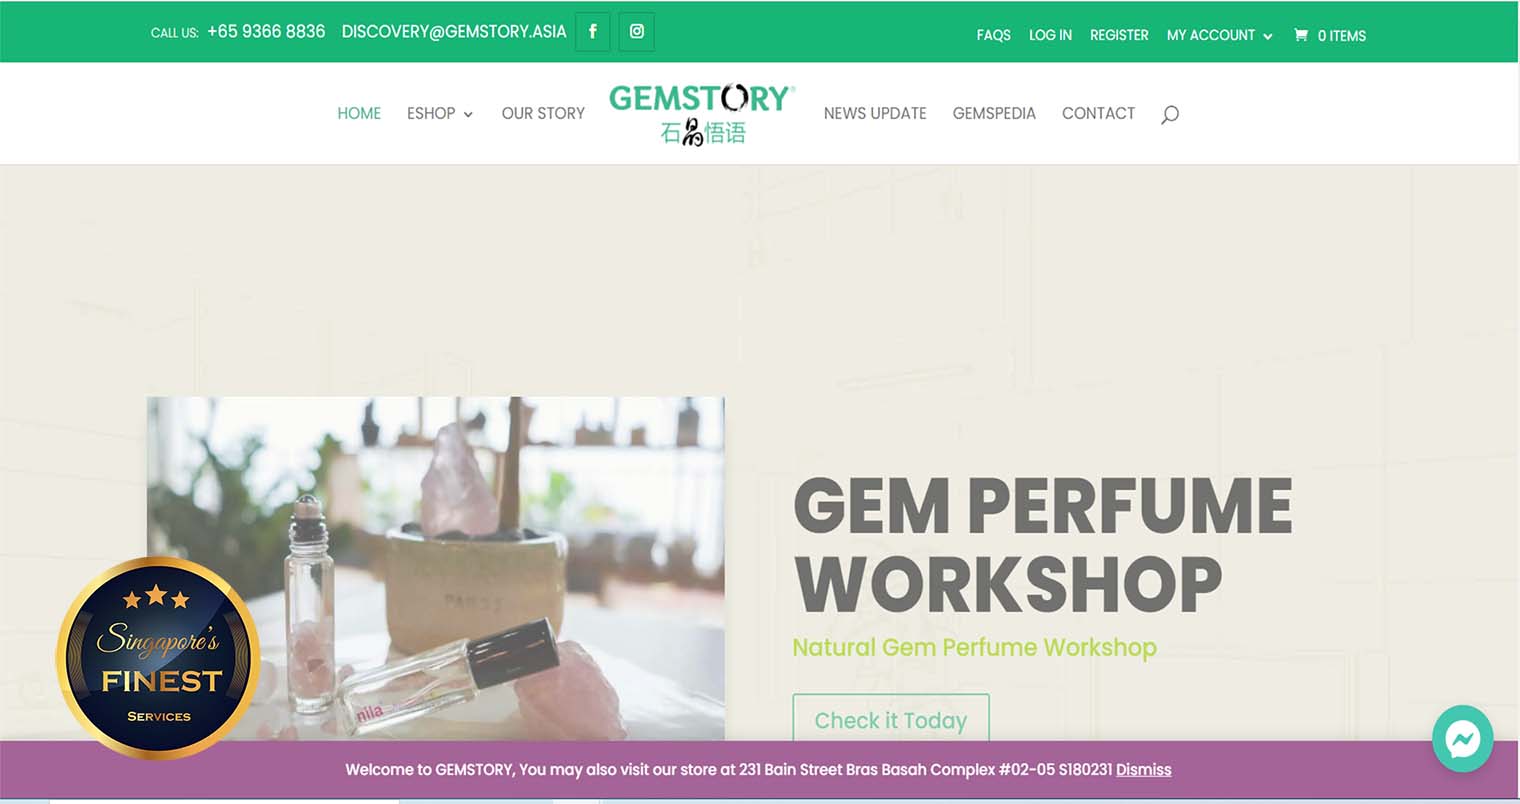 GemStory - Crystal Shop Singapore